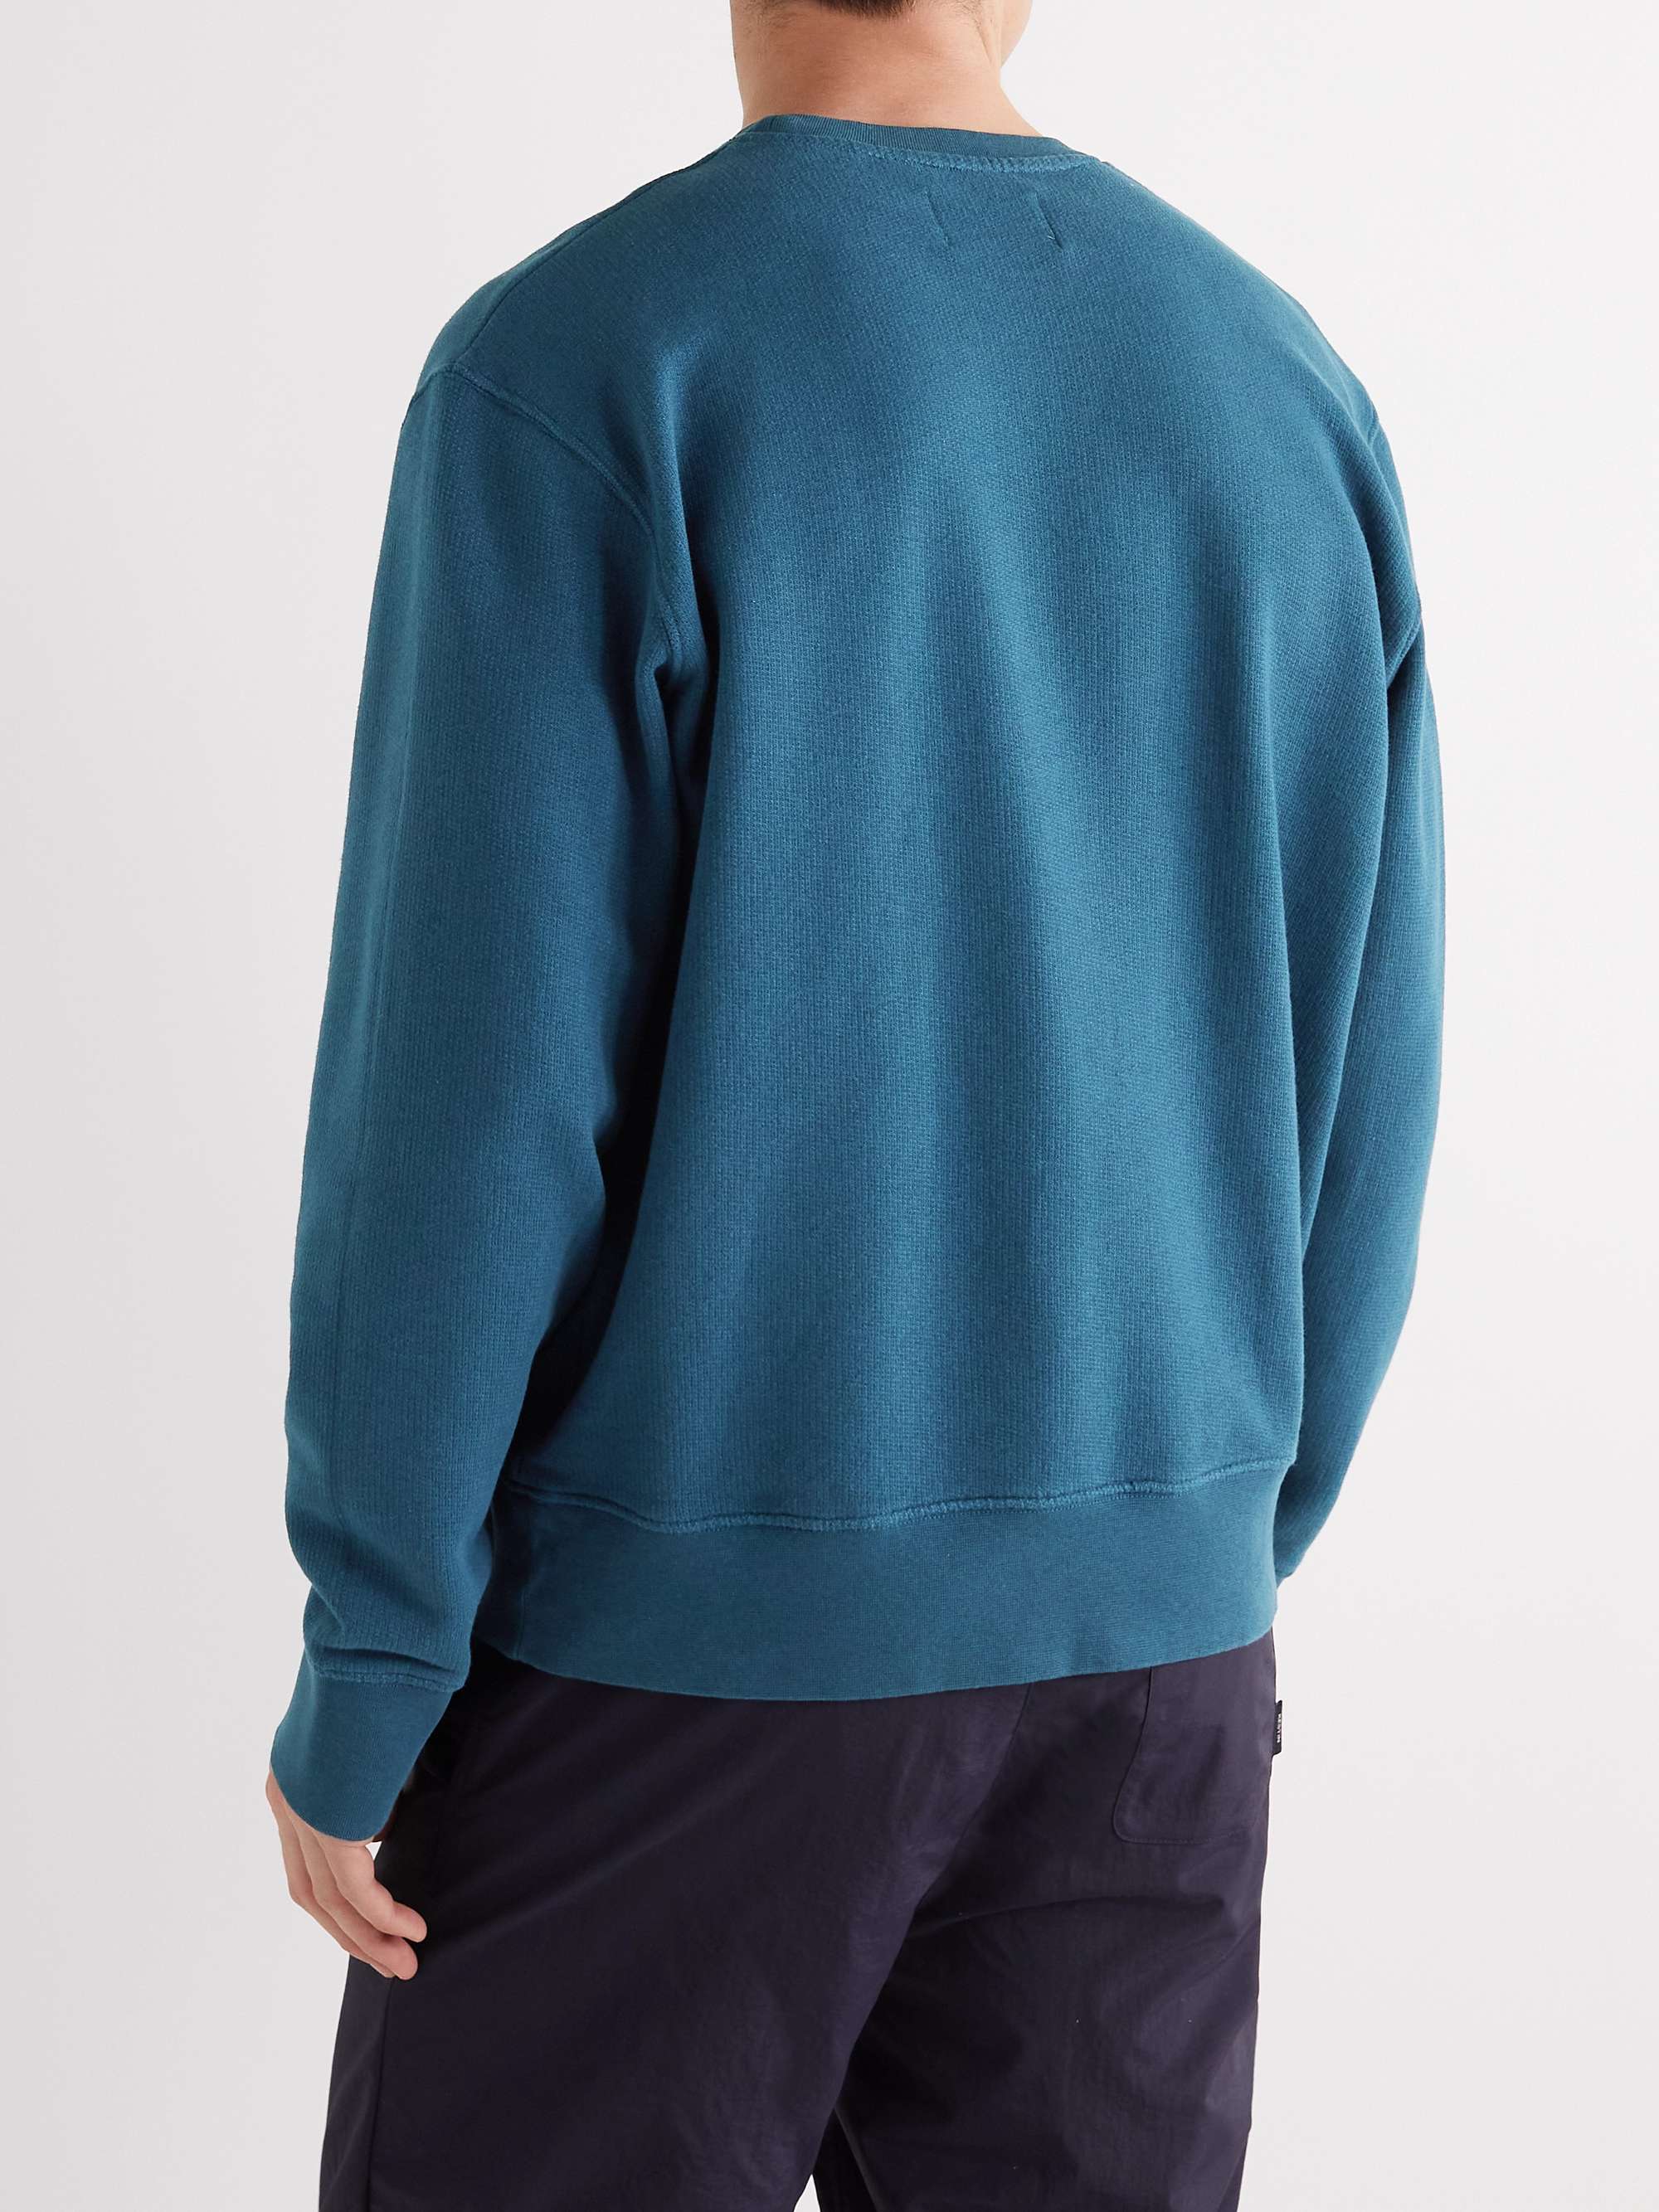 FOLK Organic Cotton-Jersey Sweatshirt